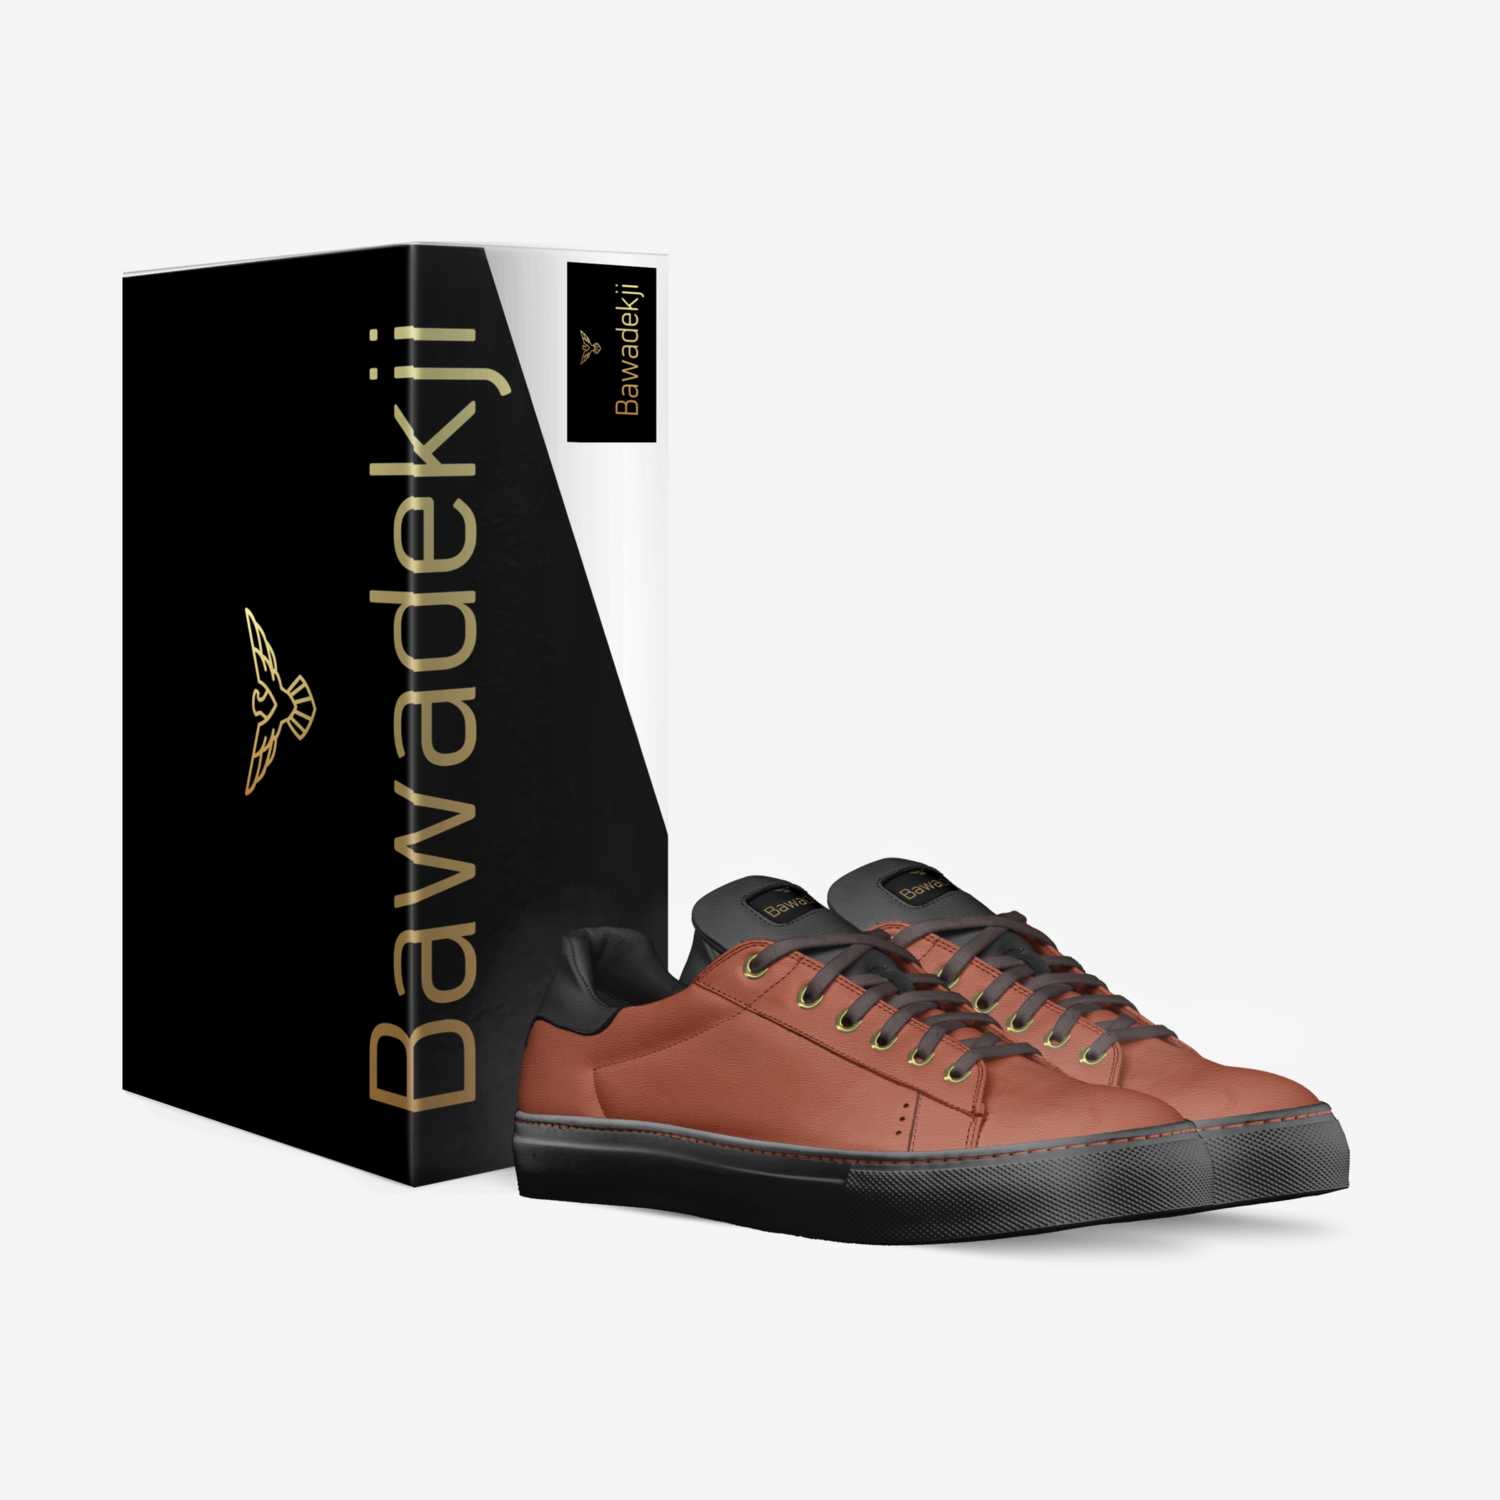 Bawadekji custom made in Italy shoes by Ahmad Bawadekji | Box view